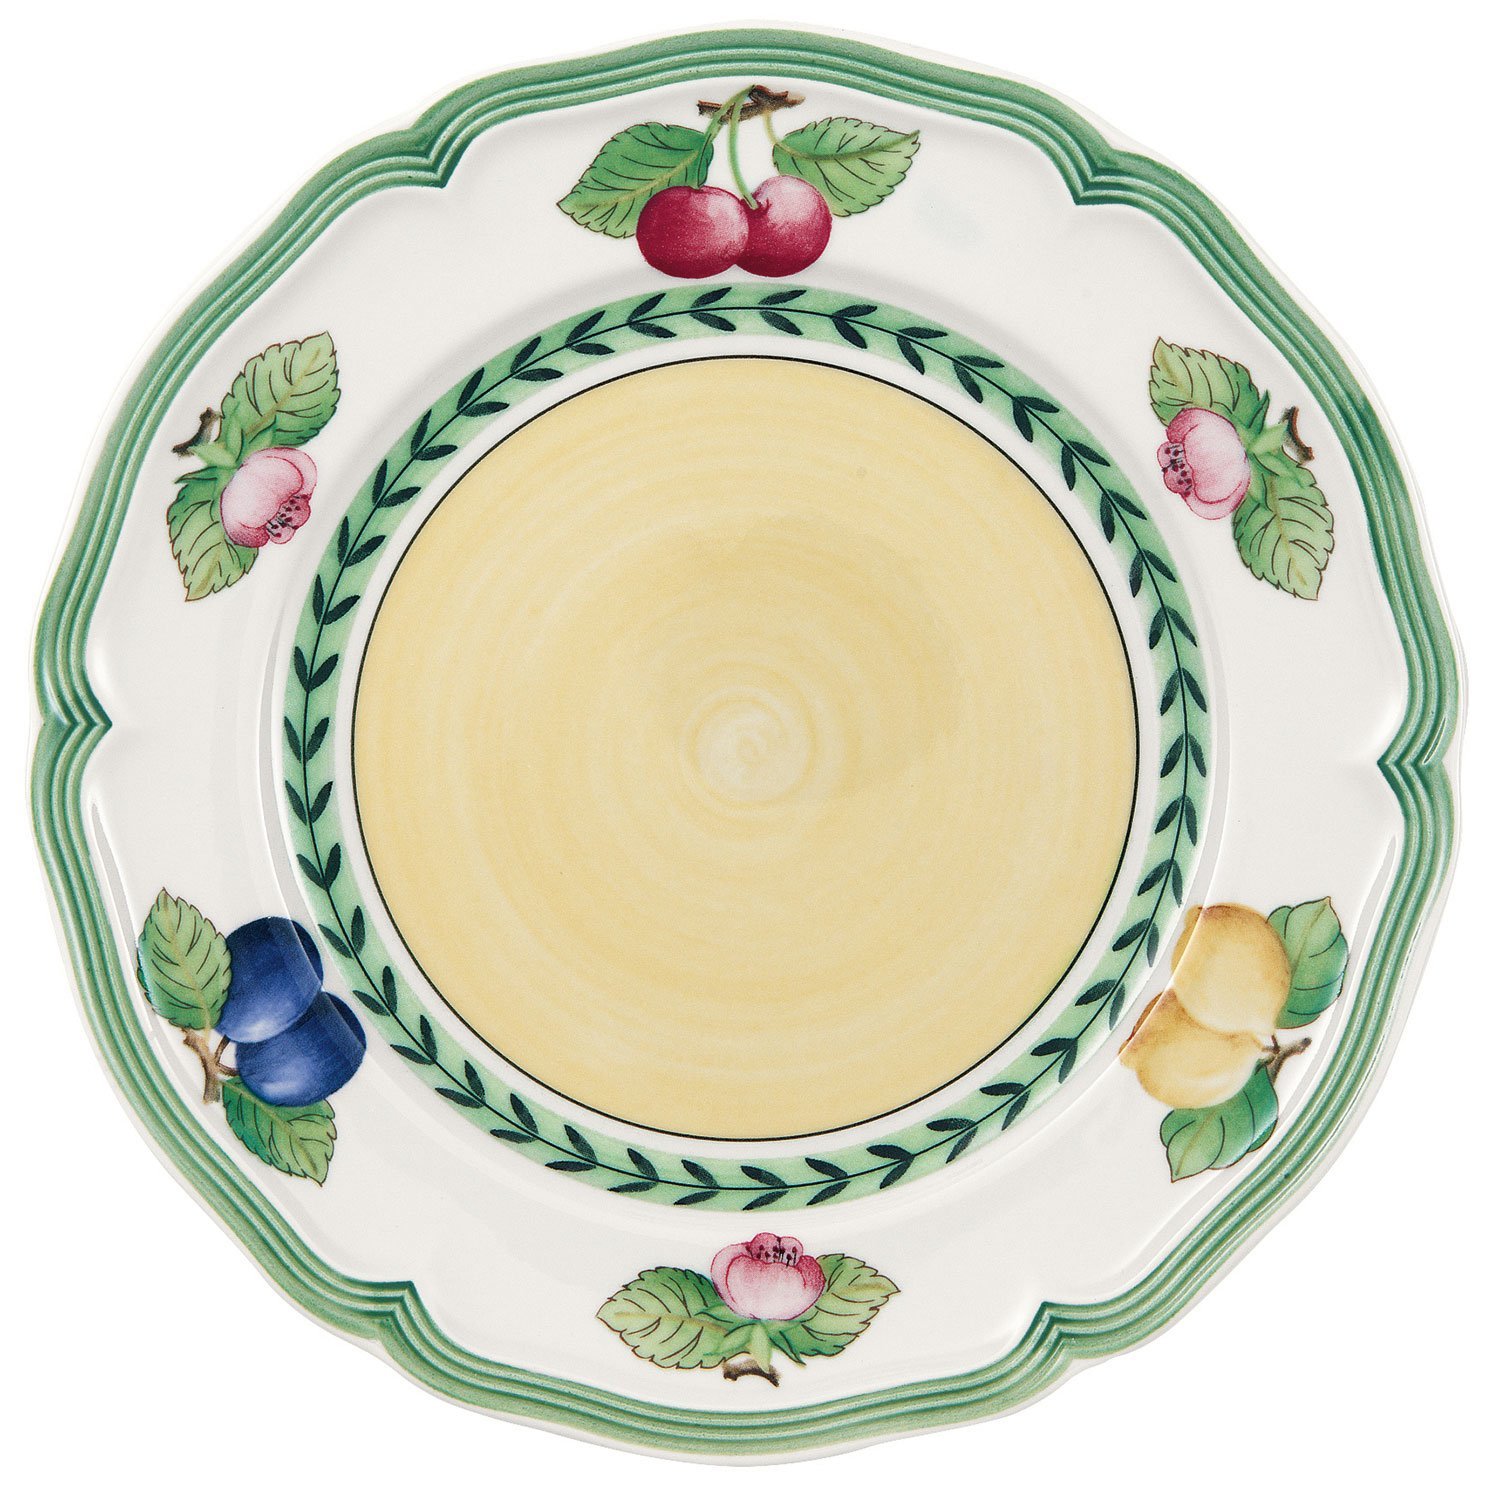 Пирожковая тарелка 17 см, French Garden Fleurence
https://spb.v-b.ru
г.Санкт-Петербург
eshop@v-b.spb.ru
+7(812)3801977